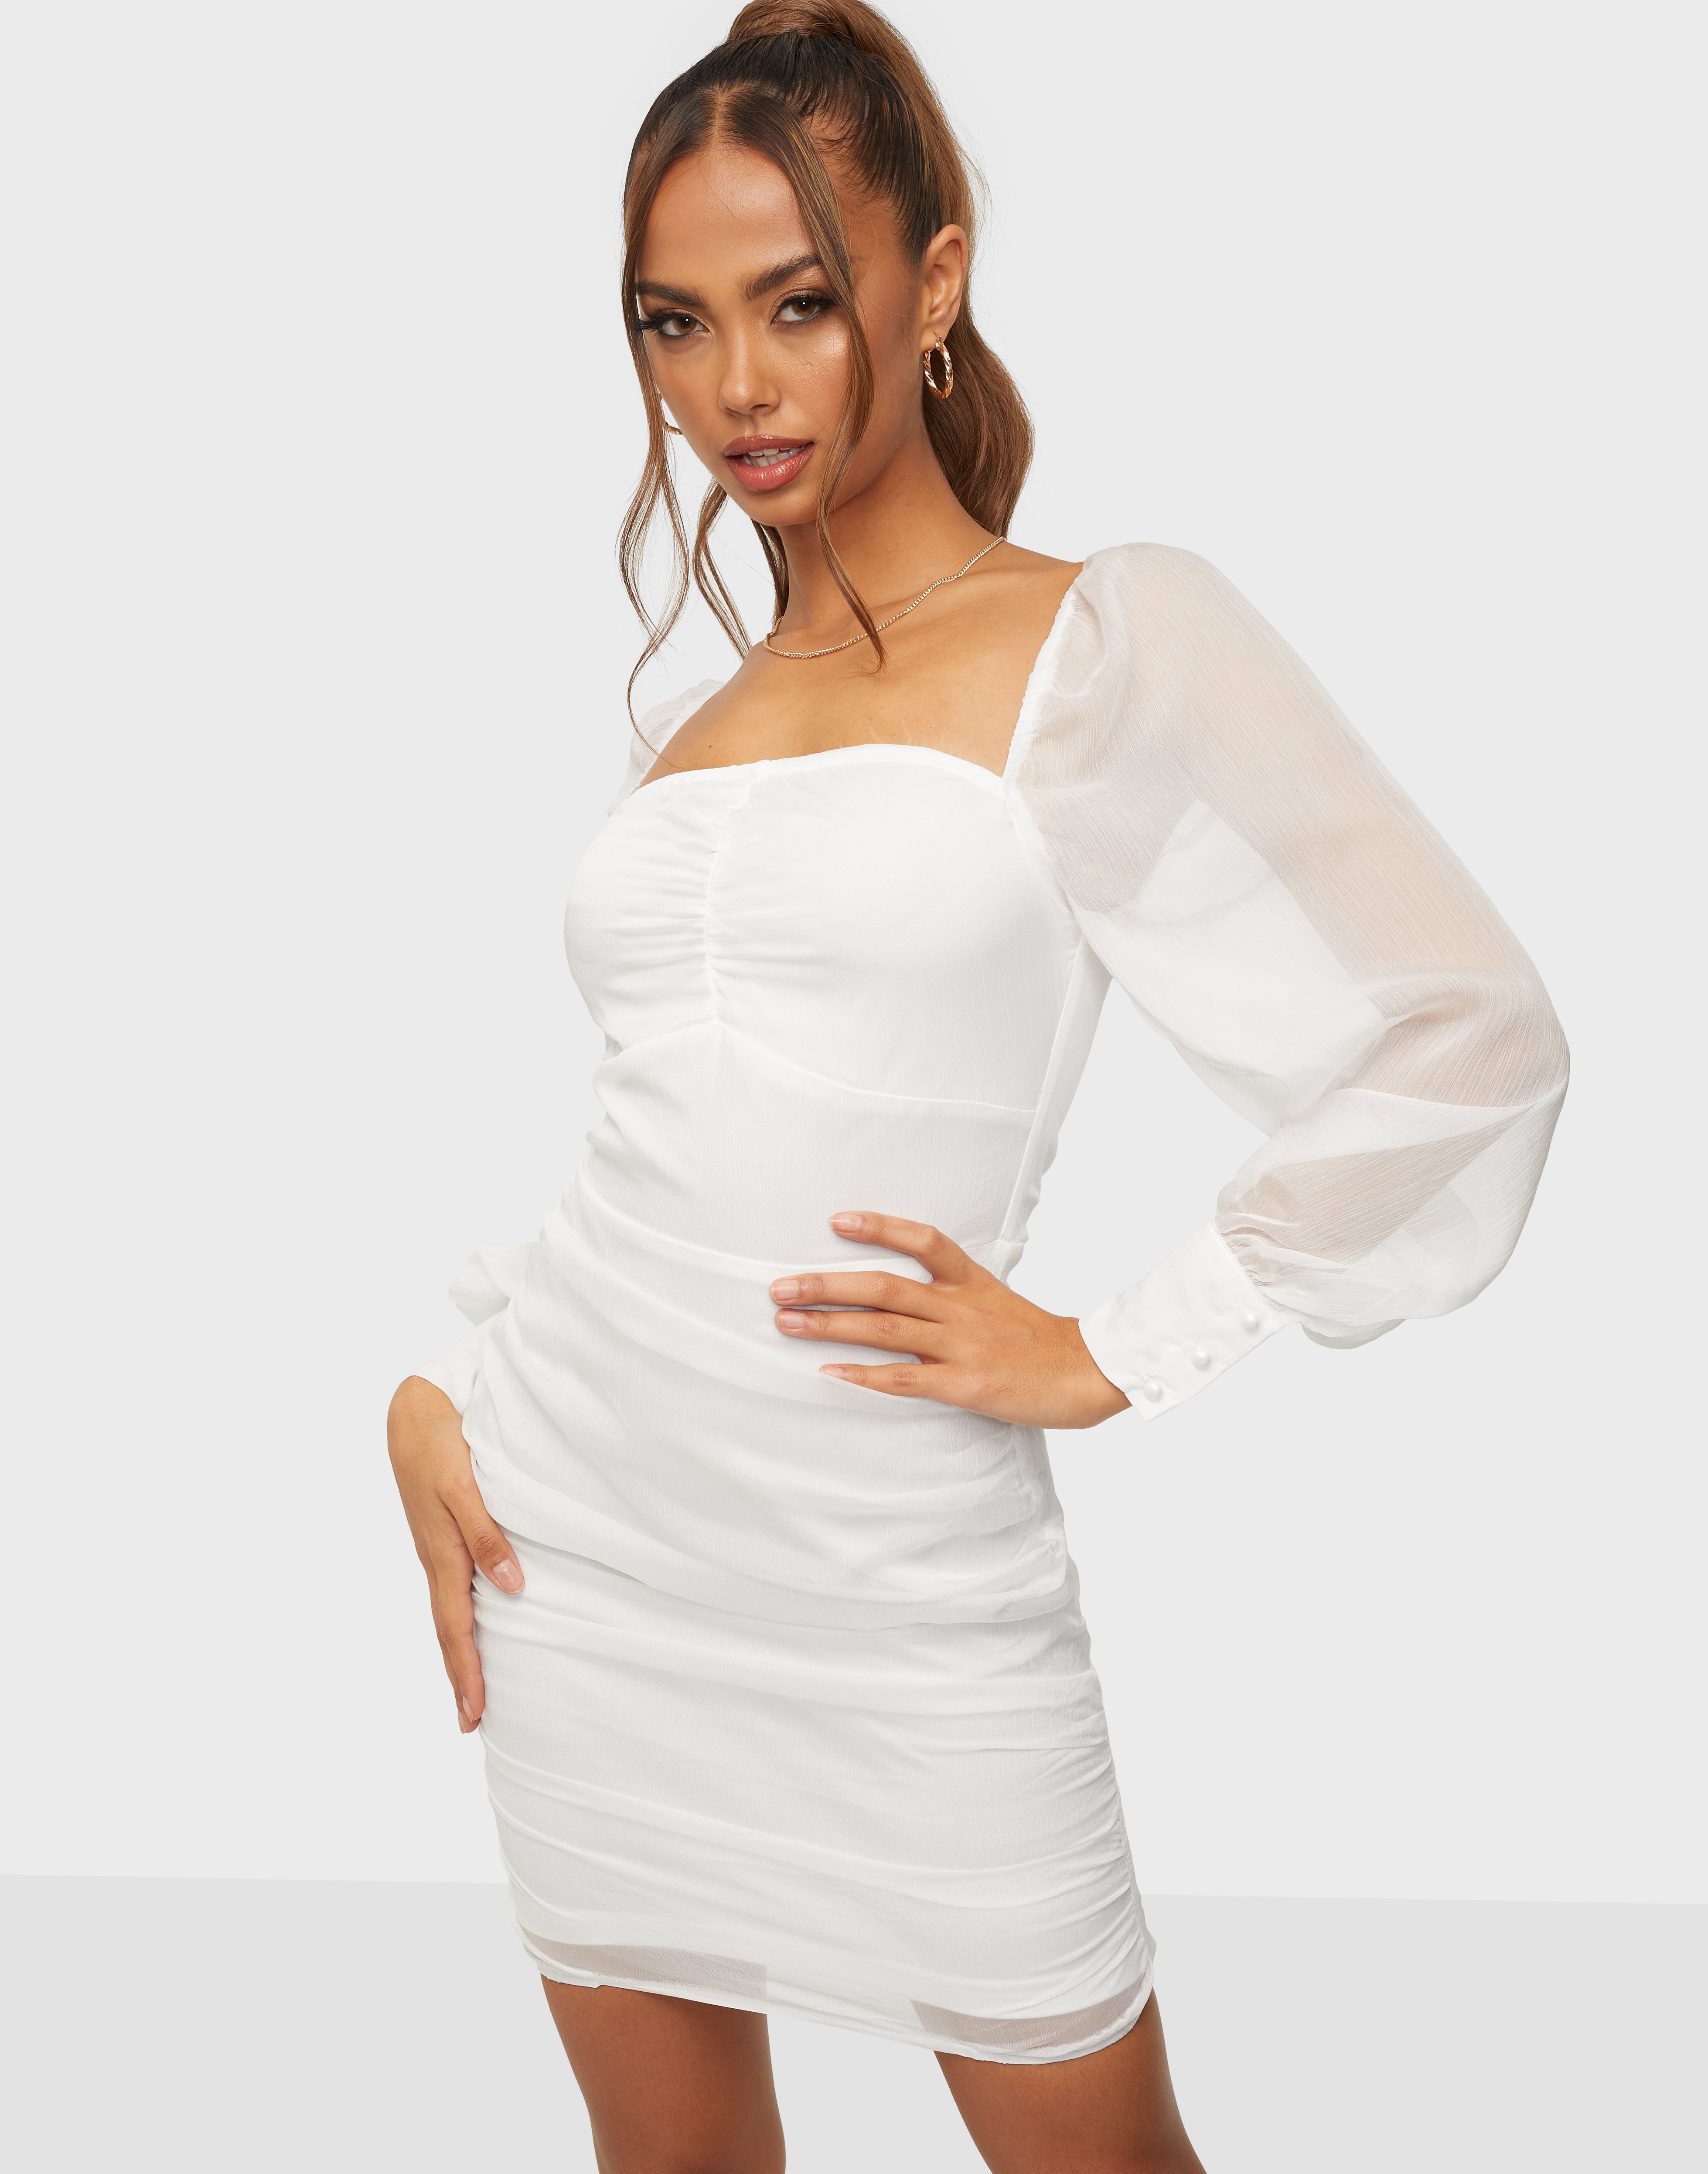 sheer white mini dress | Dresses Images 2022